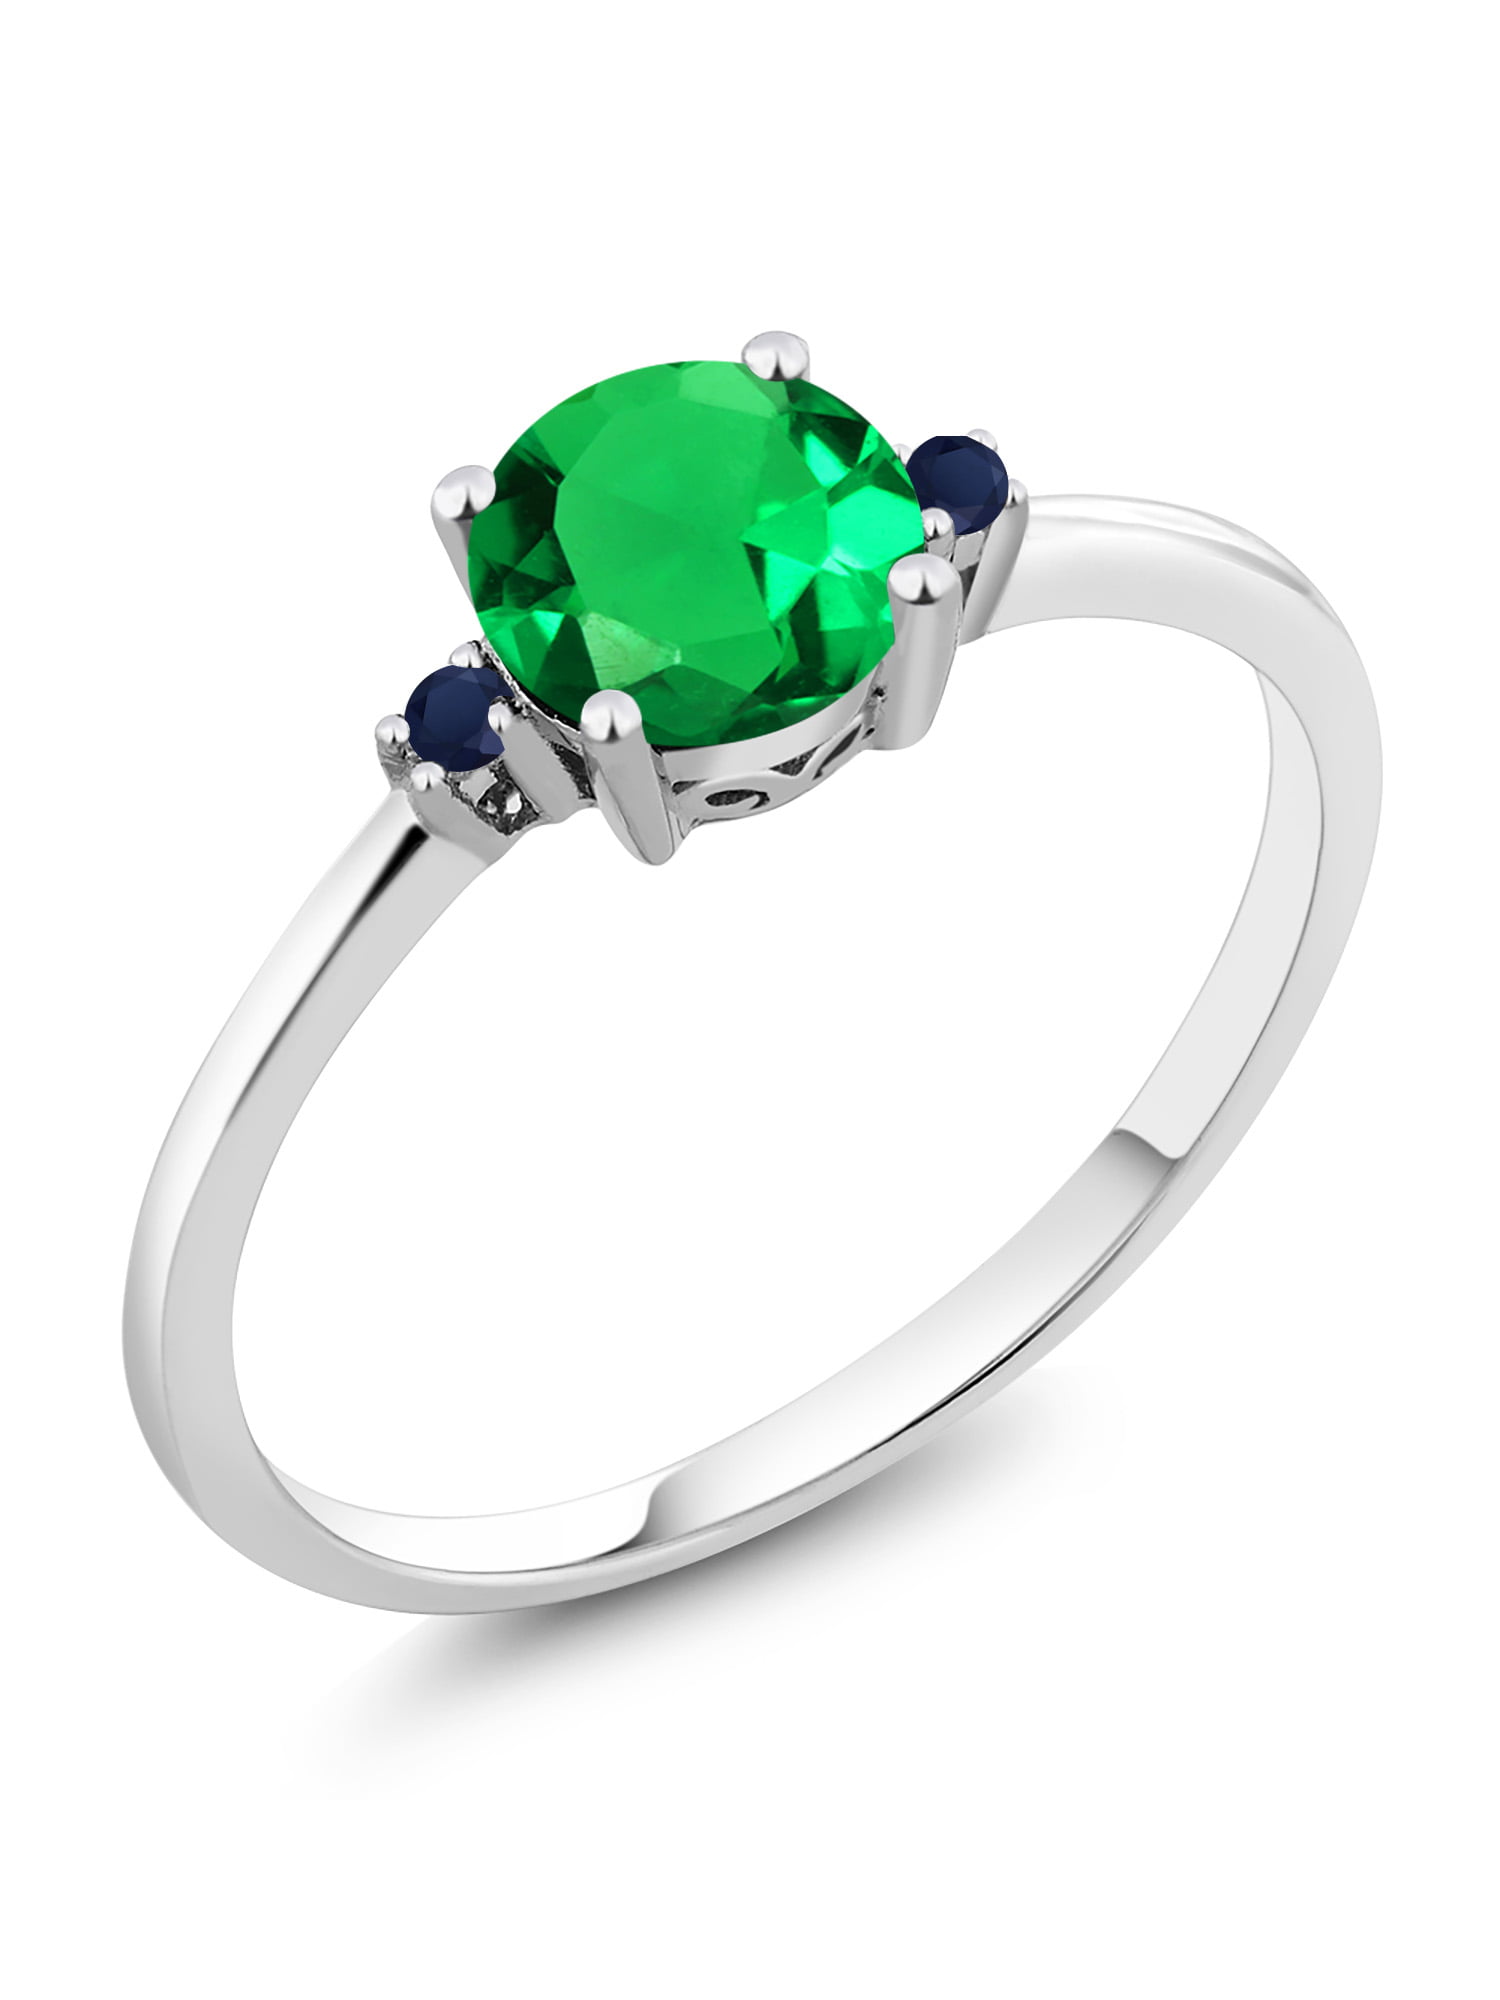 Size  6 Green Emerald Gem Engagement Ring 10KT White Gold Filled Wedding Band 